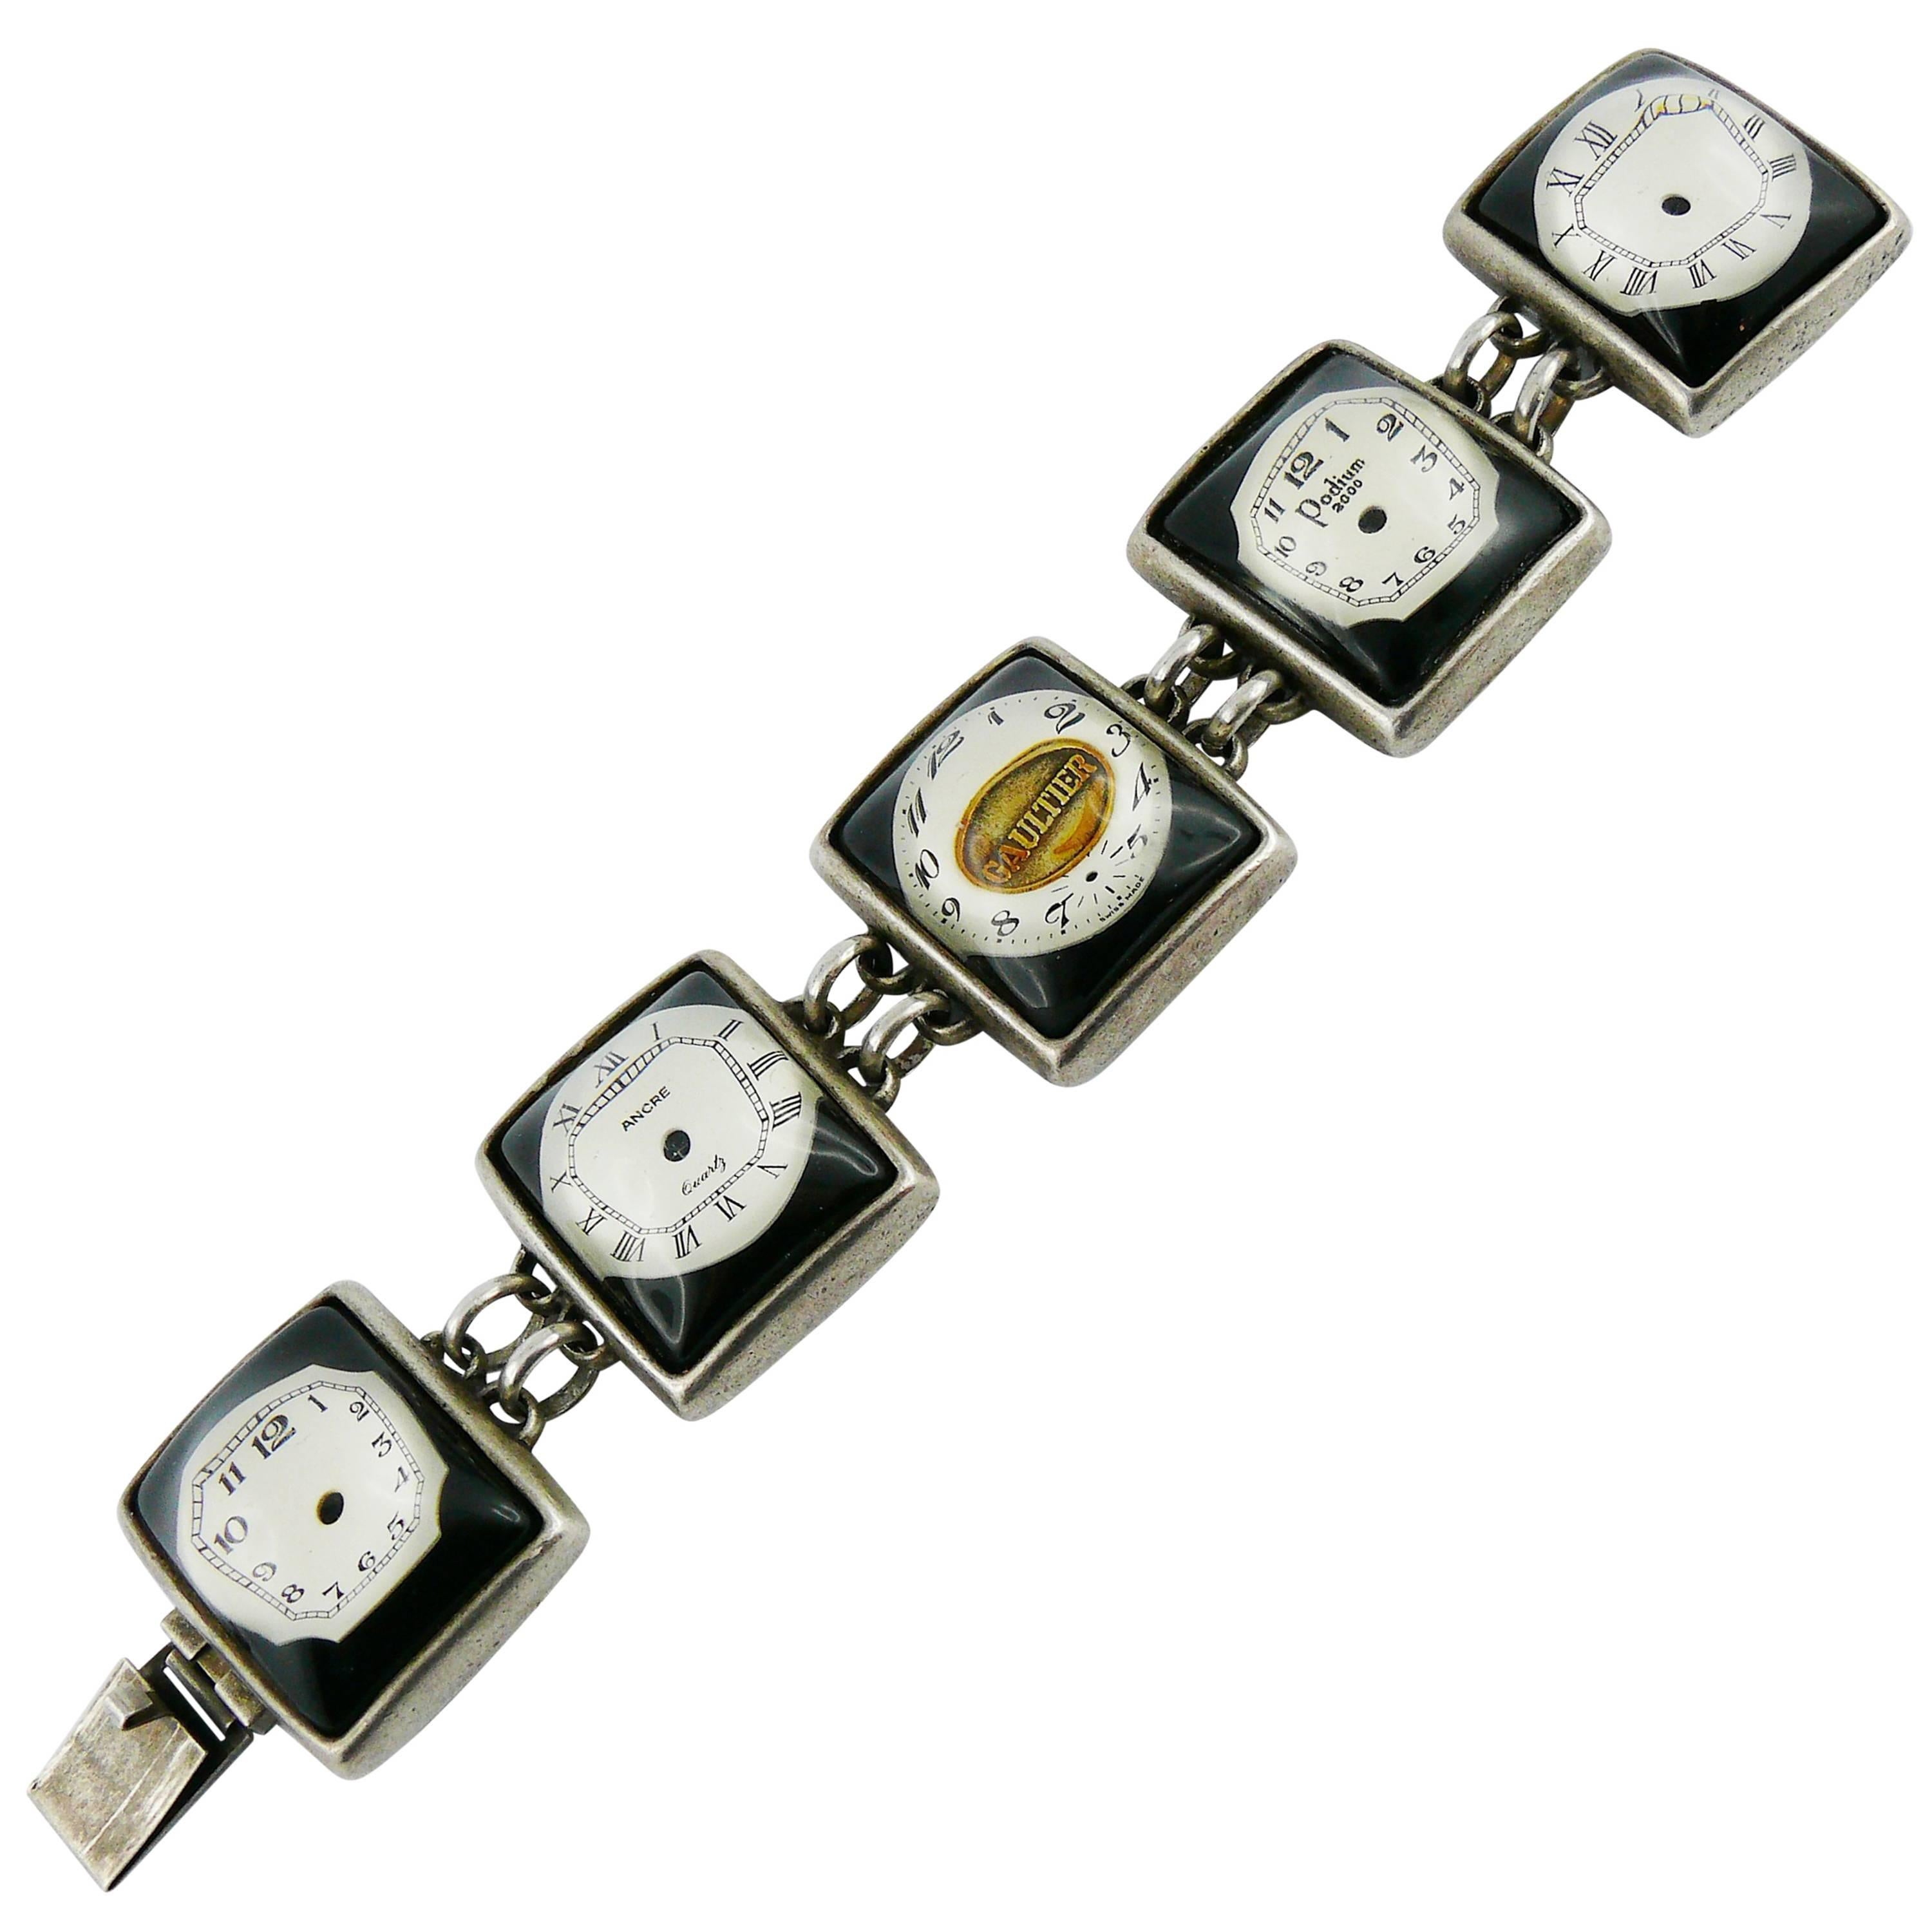 Jean Paul Gaultier Vintage Rare Collectable Watch Bracelet For Sale